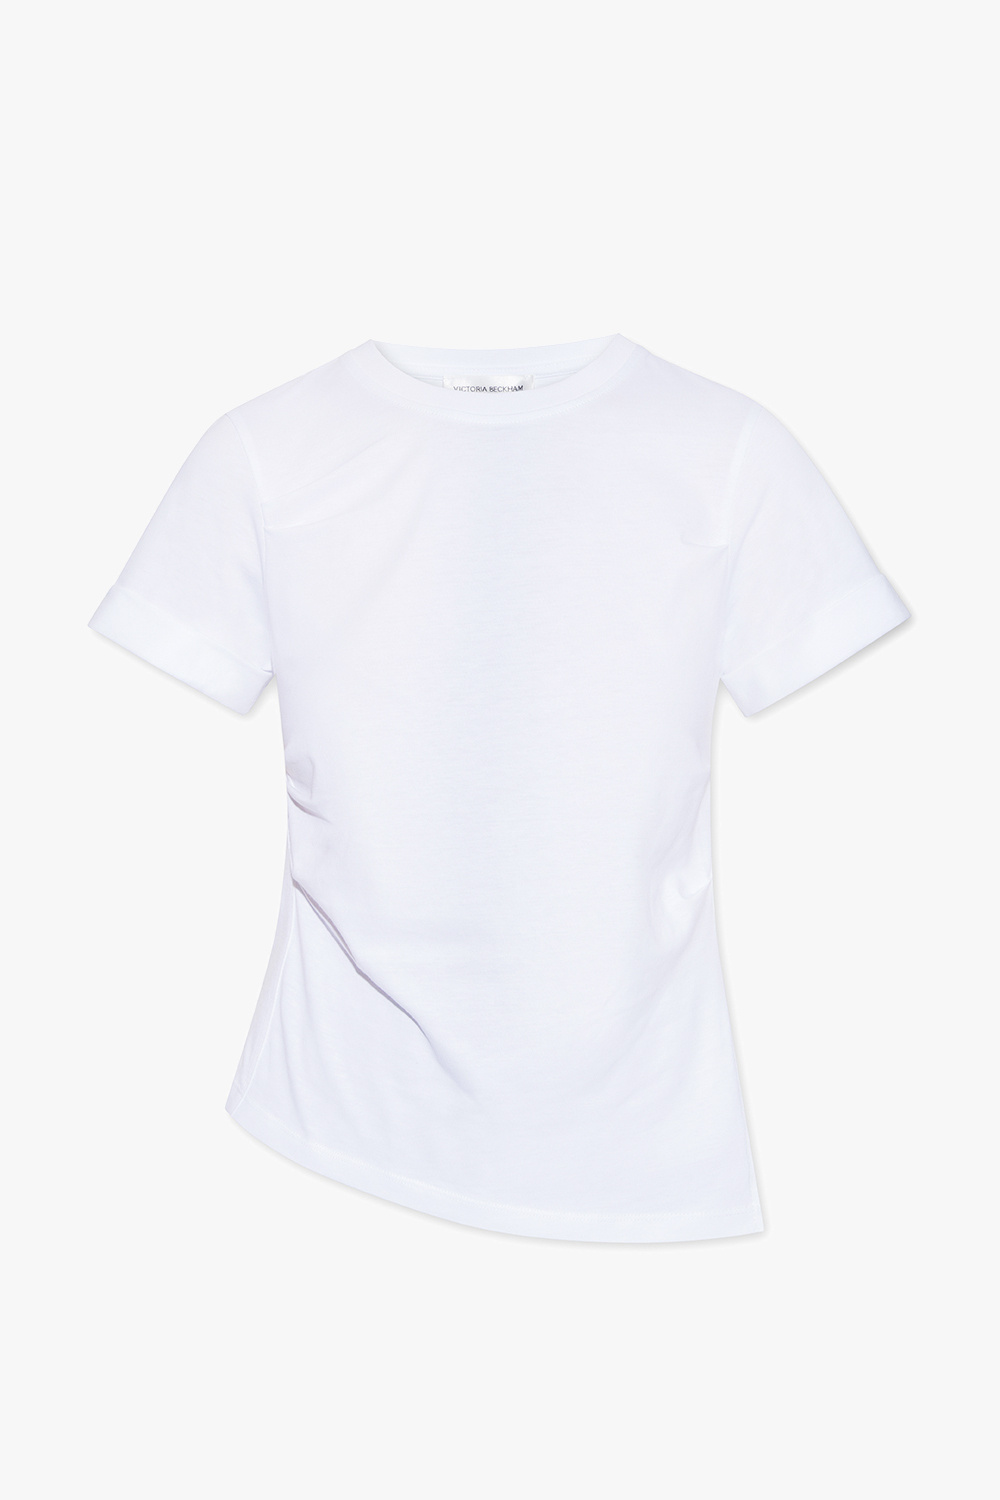 Victoria Beckham Draped T-shirt